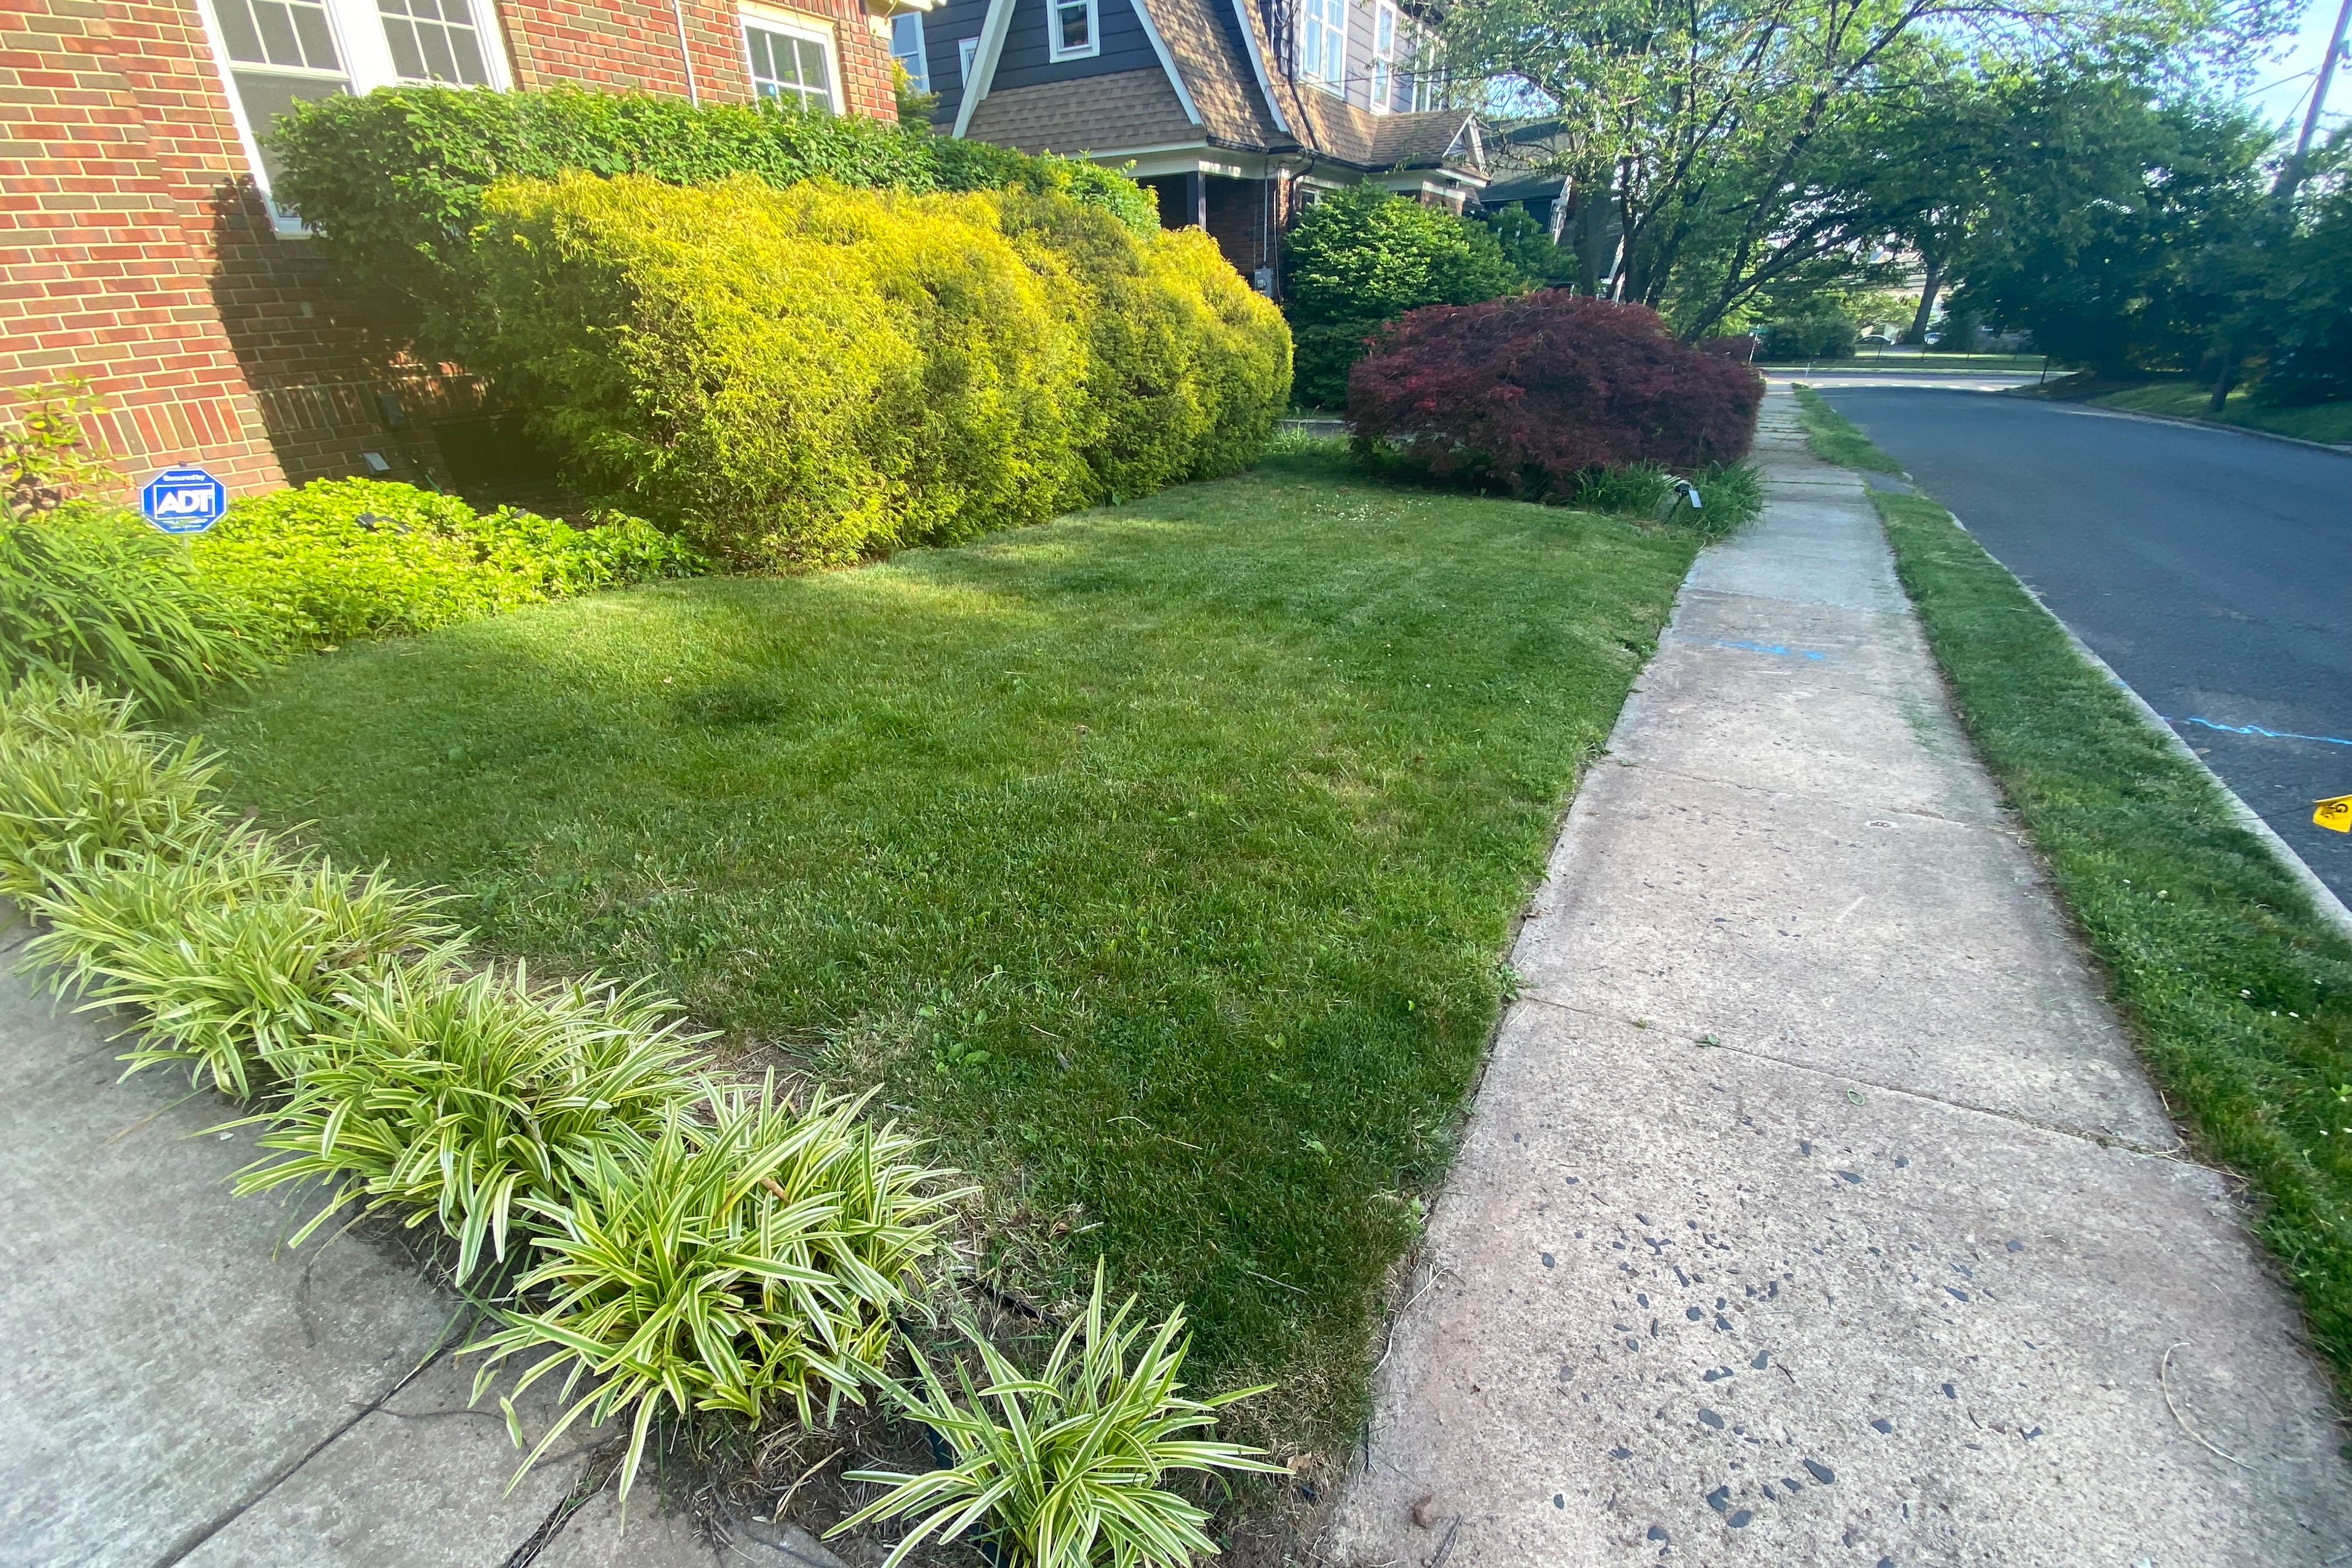 A cleanly cut suburban lawn and sidewalk at dusk.